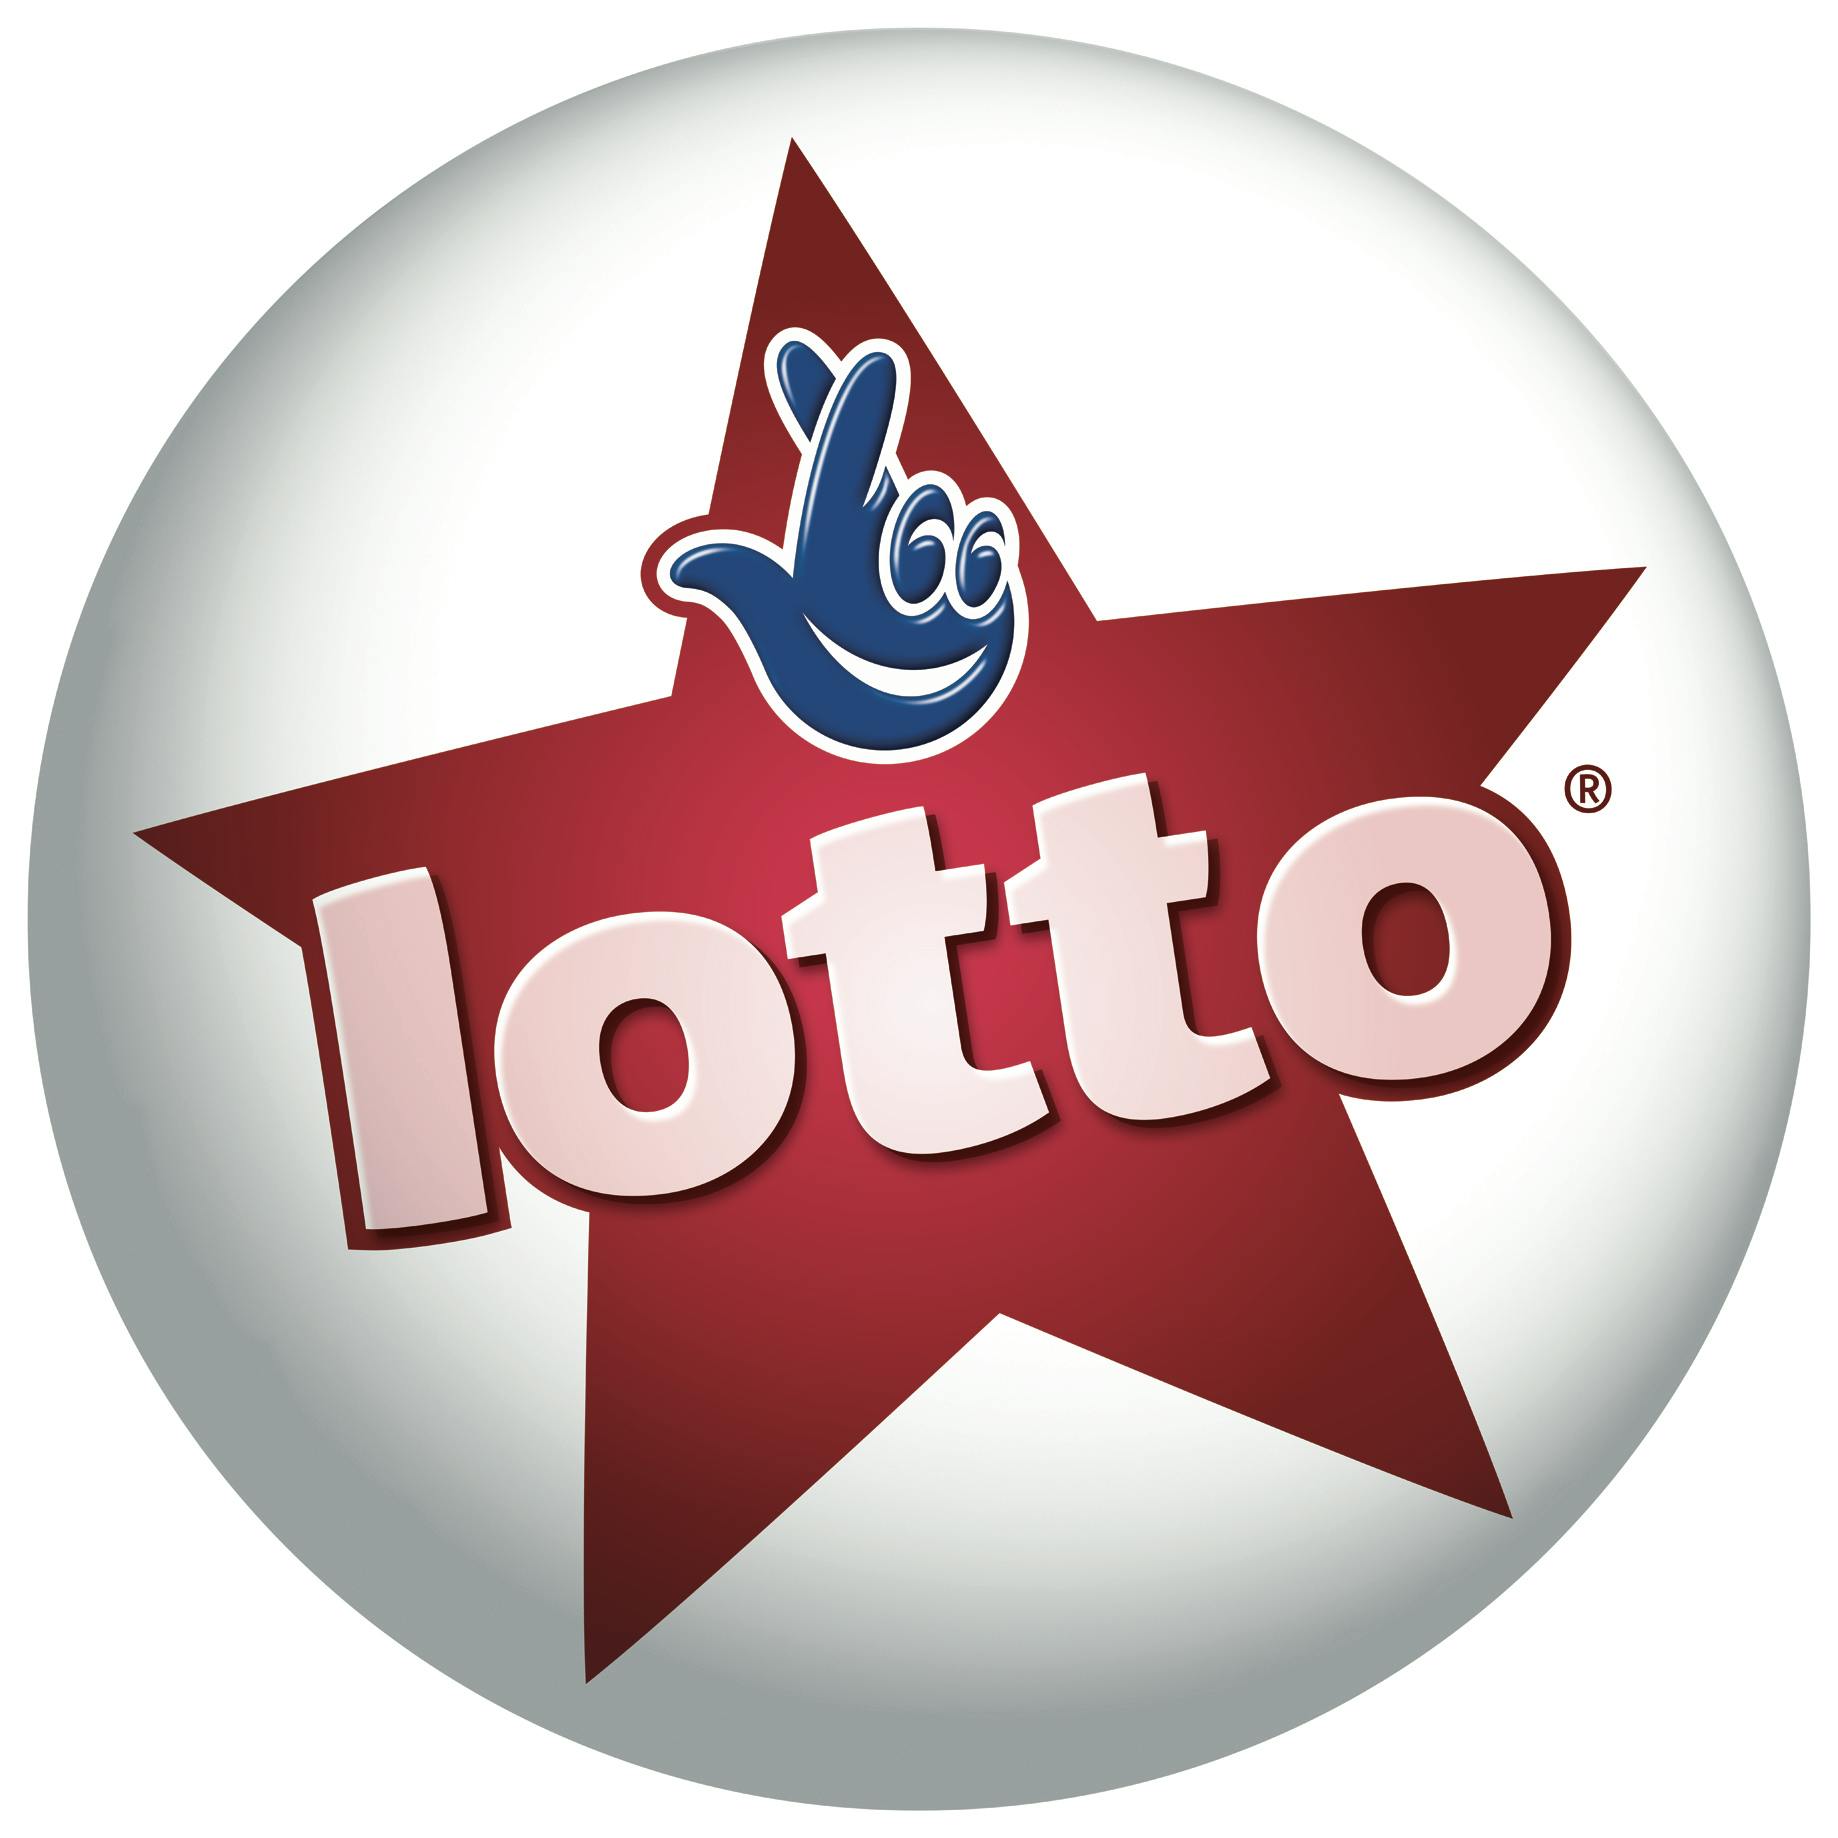 lotto brand logo